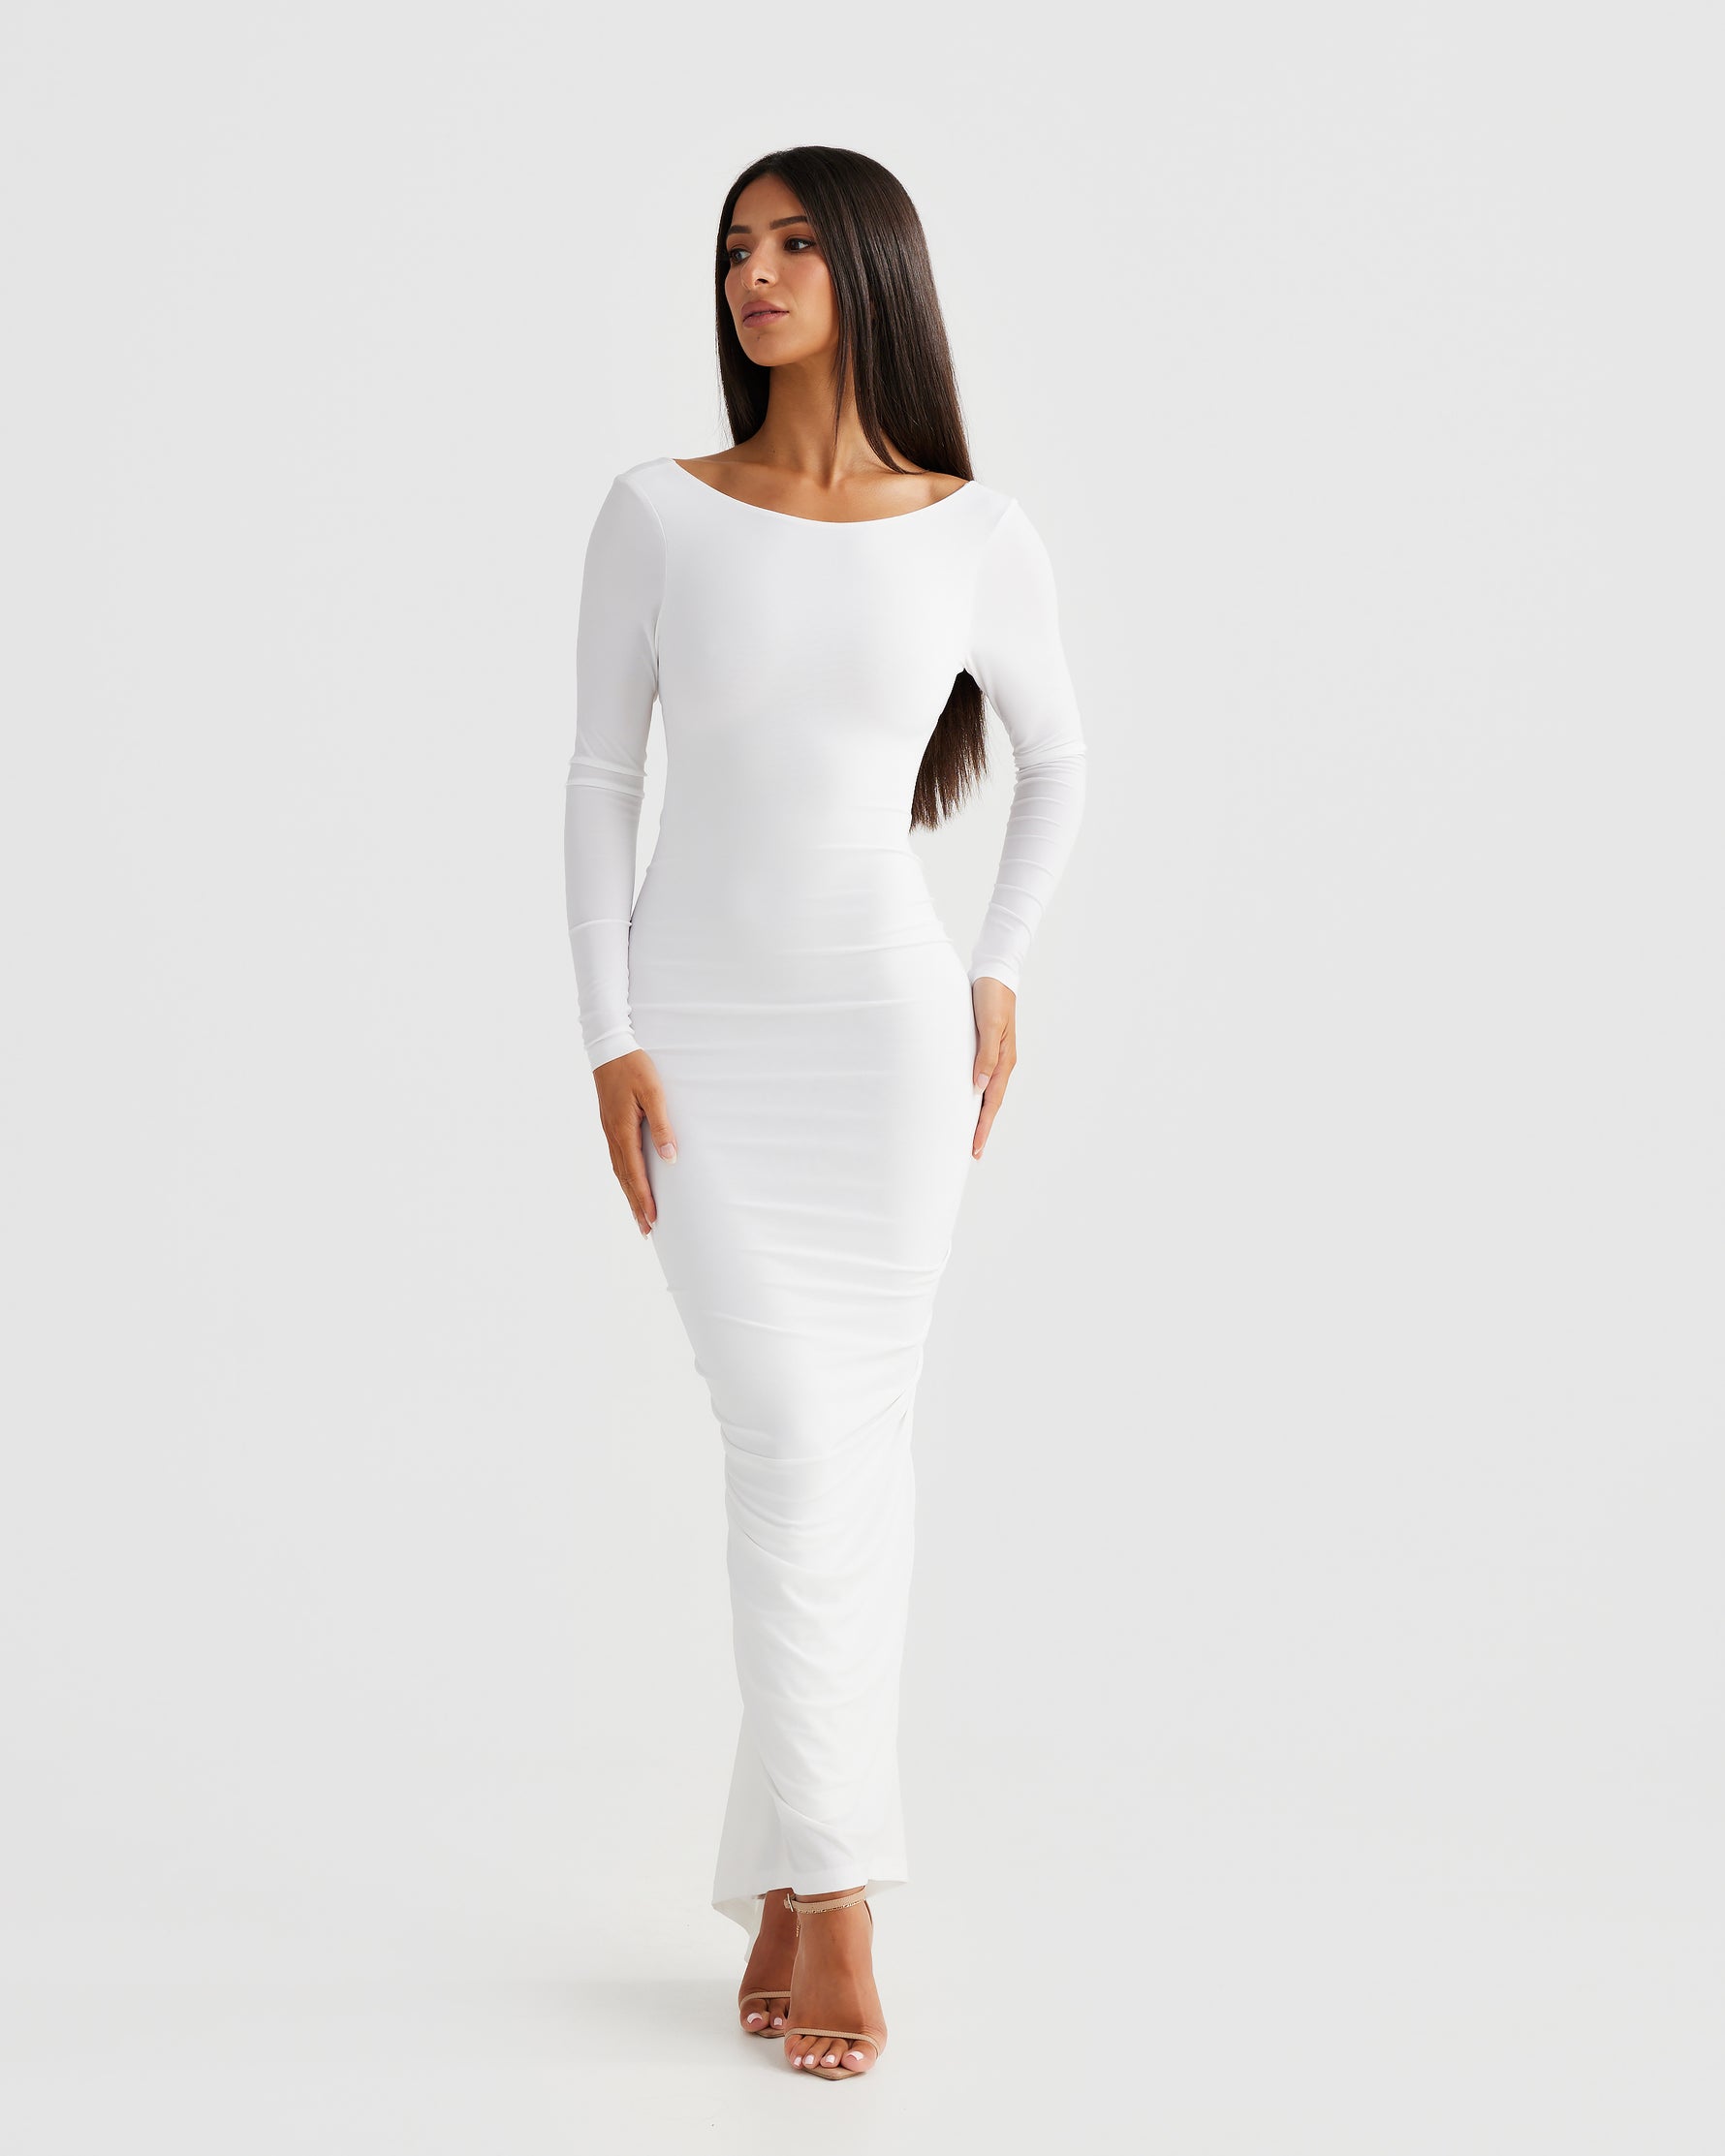 CAMILA DRESS - WHITE